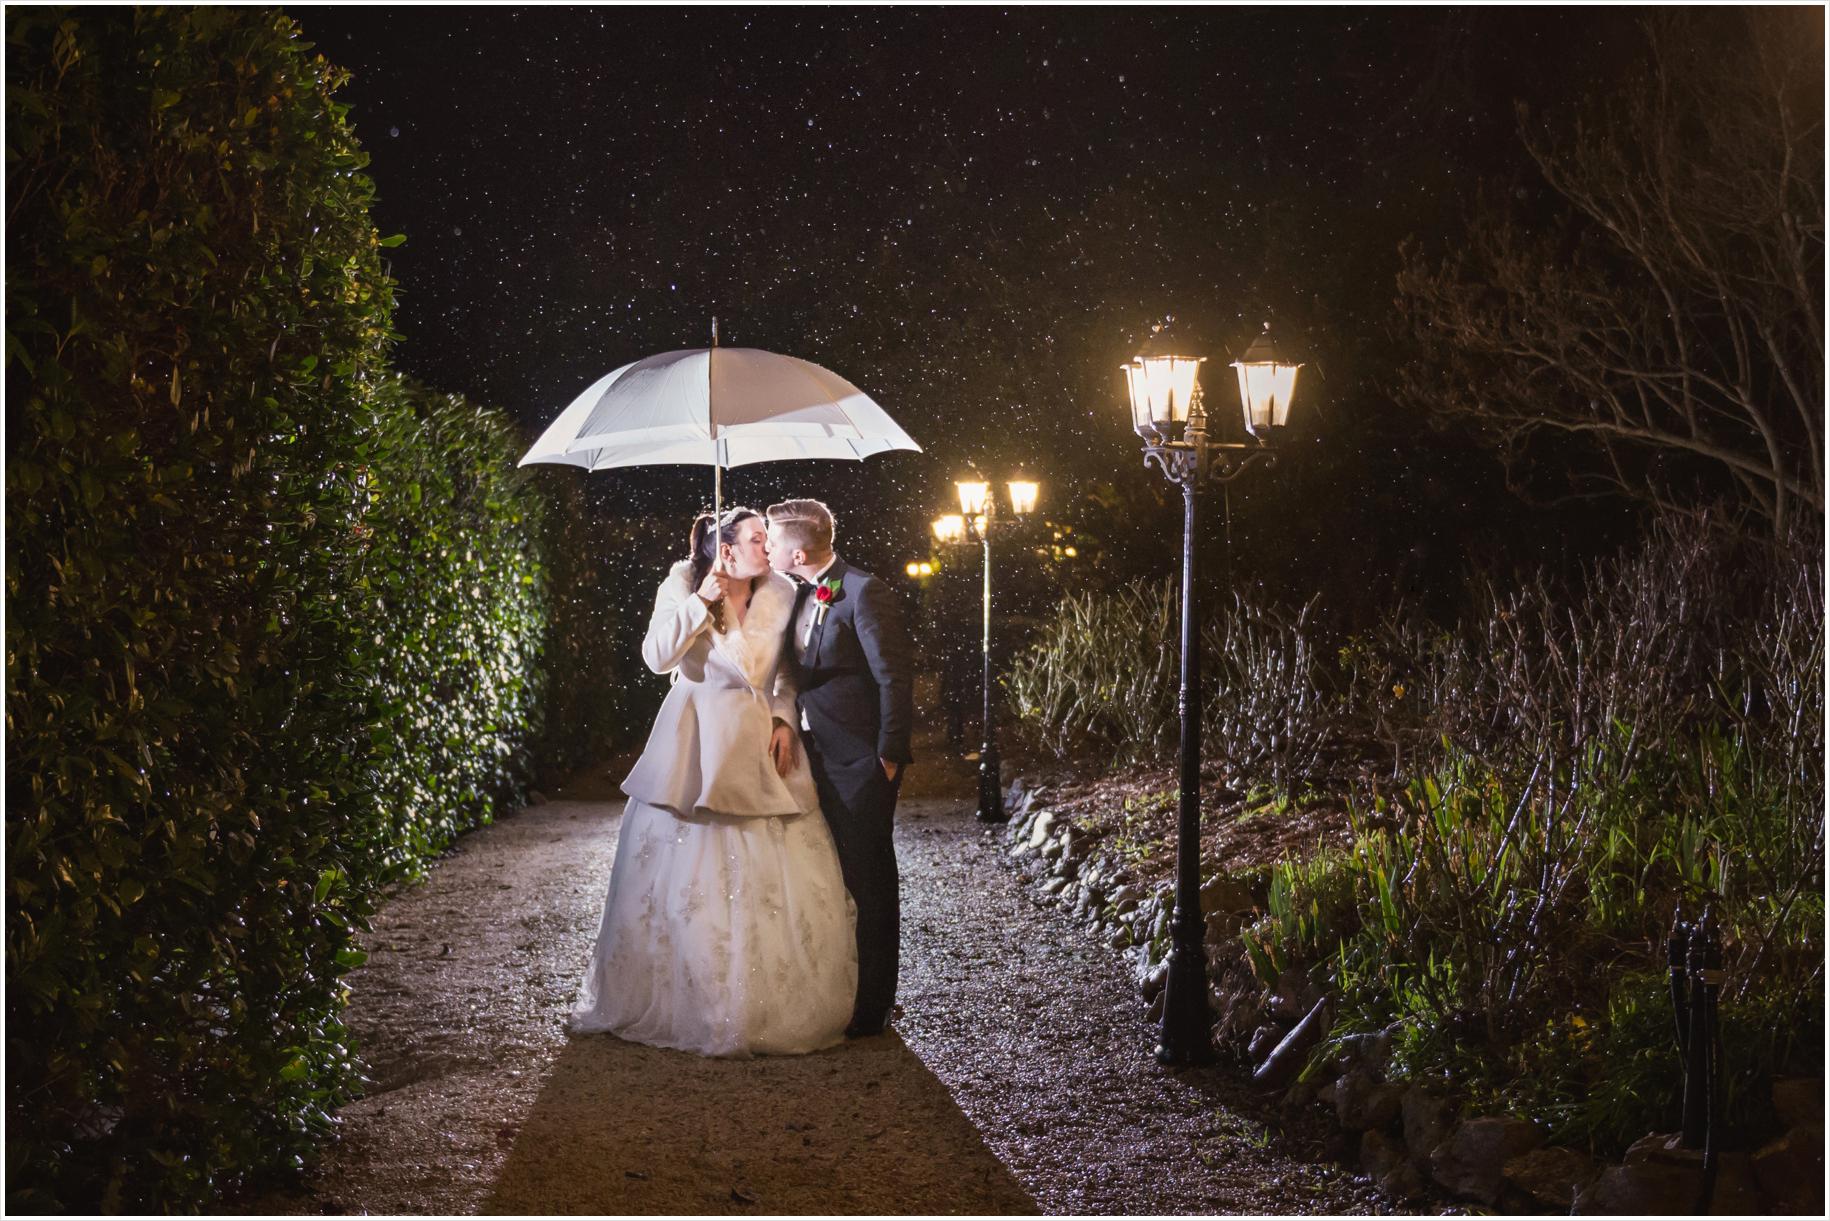 Mount lofty winter romantic wedding photos